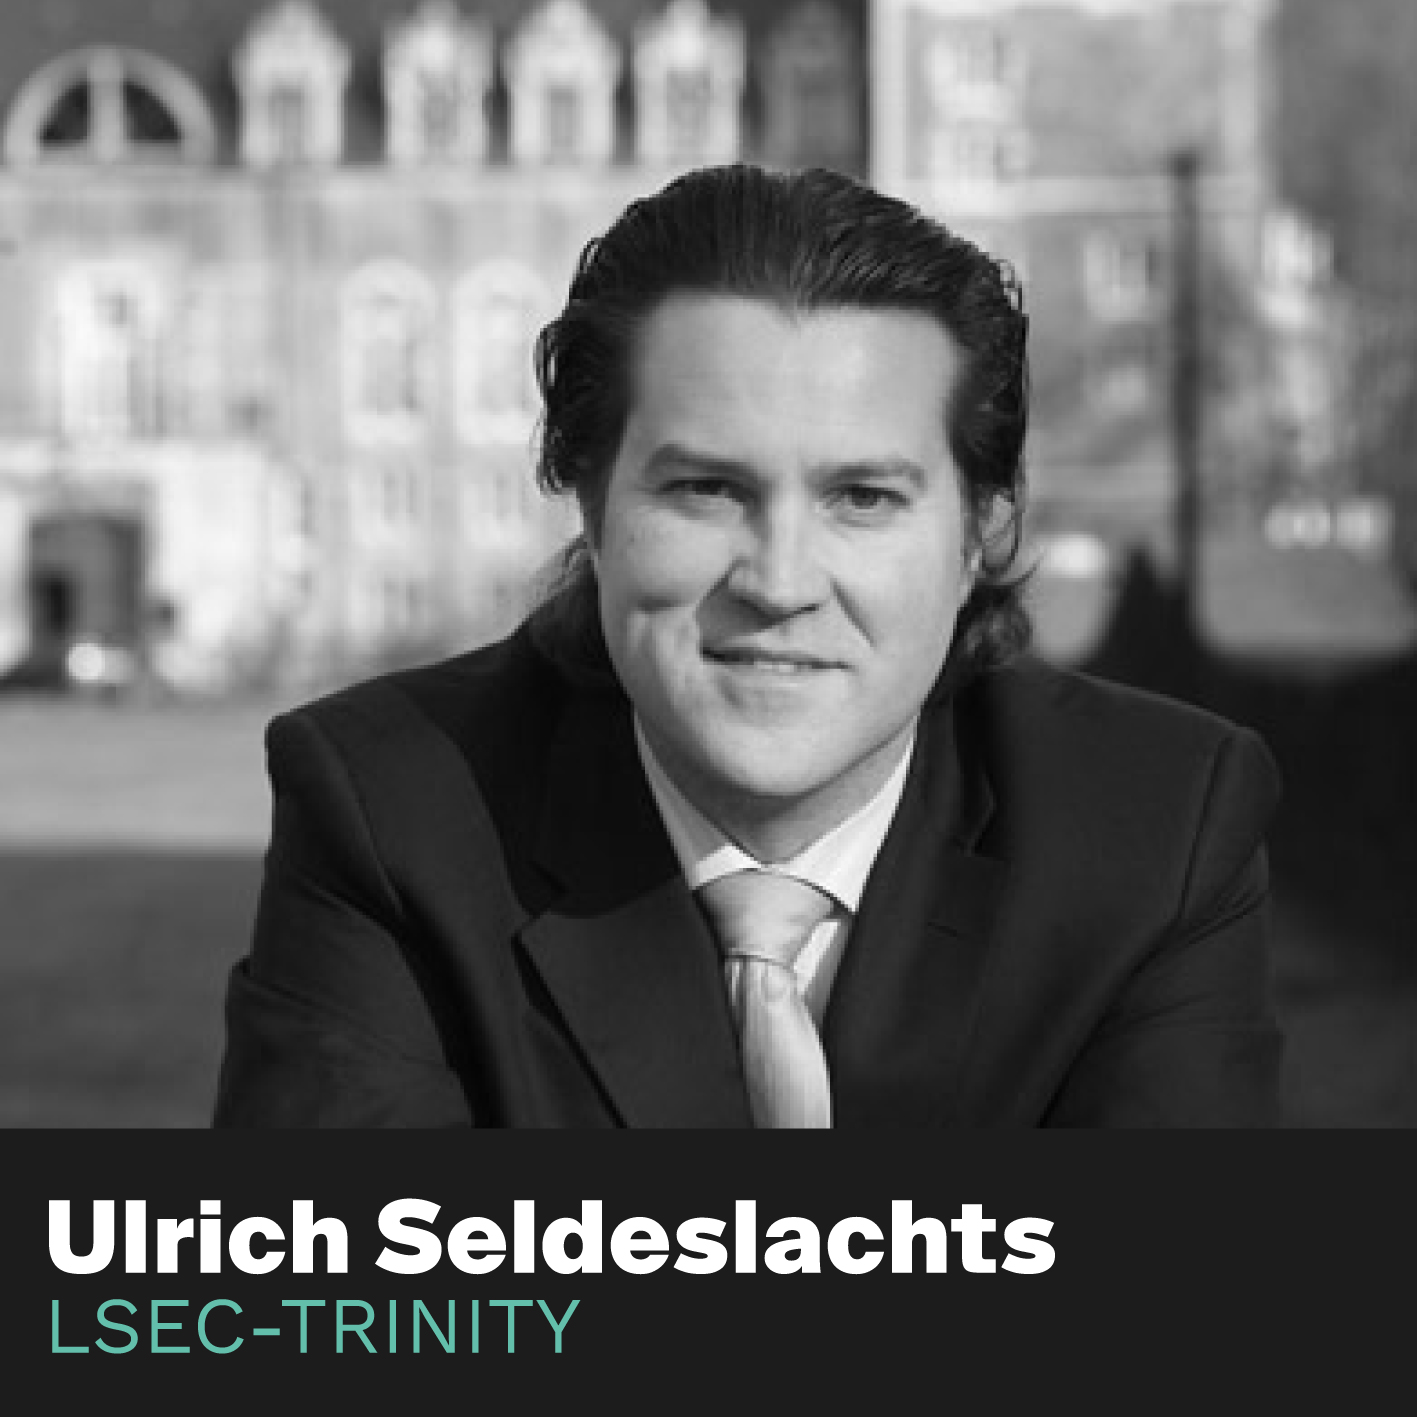 Ulrich Seldeslachts